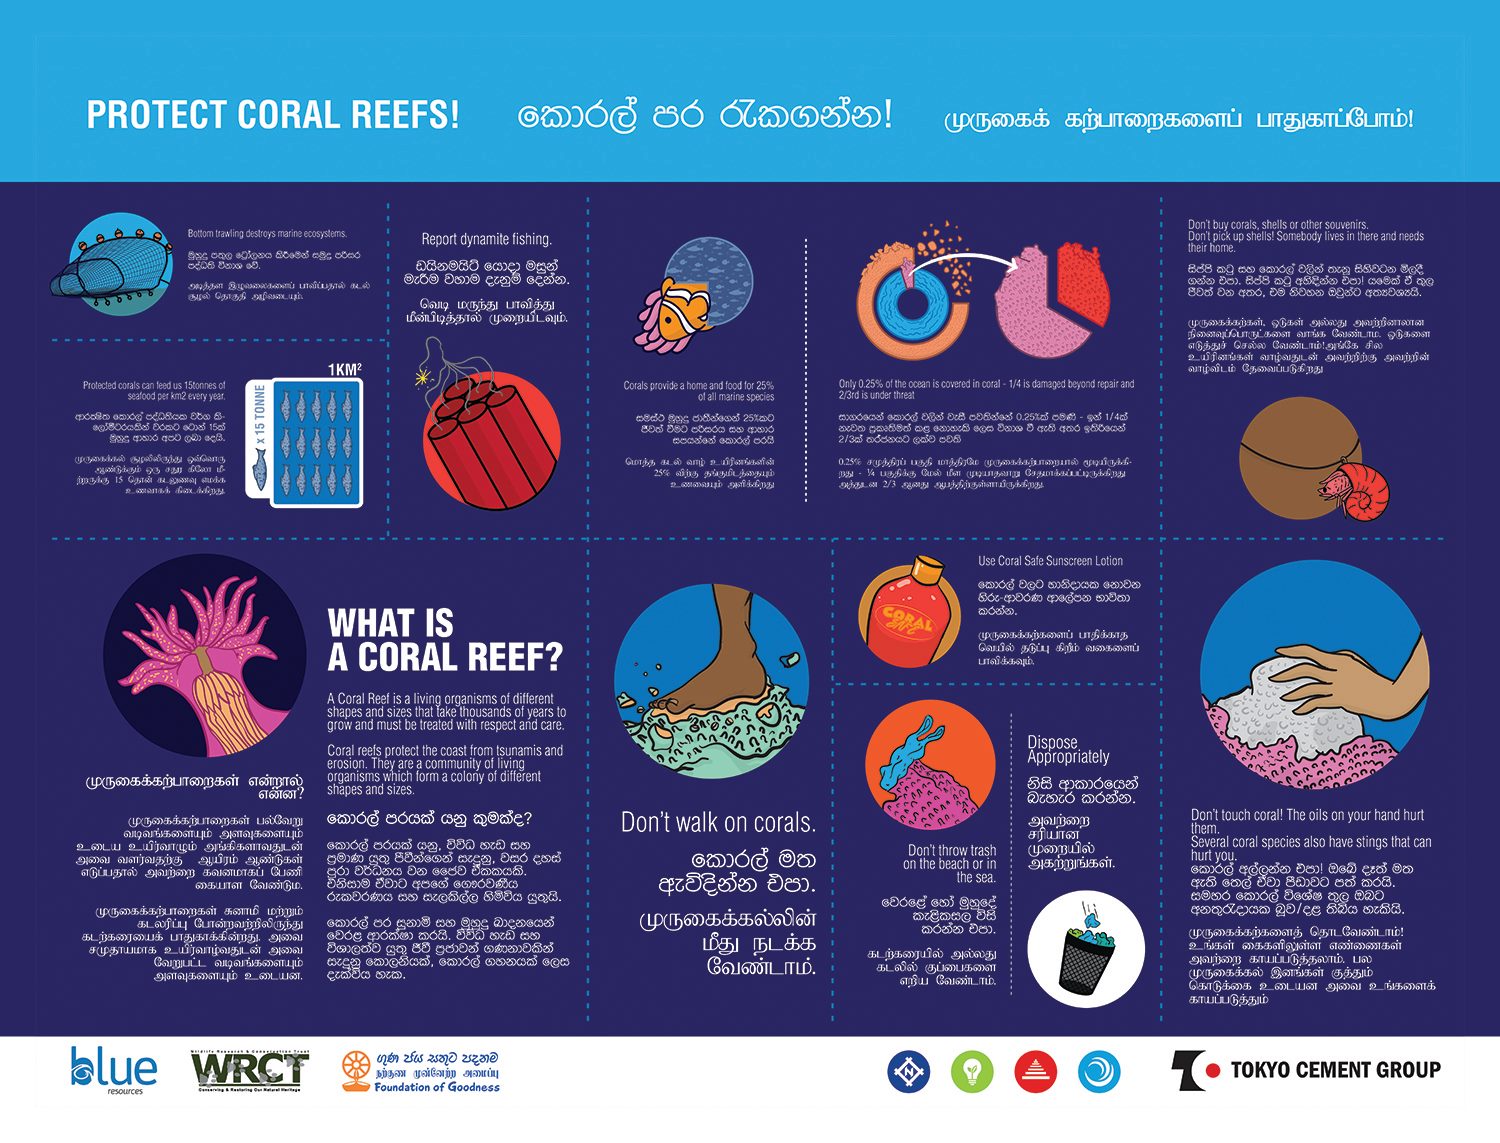 protect_corals_srilanka_seenigama_foundation_of_goodness